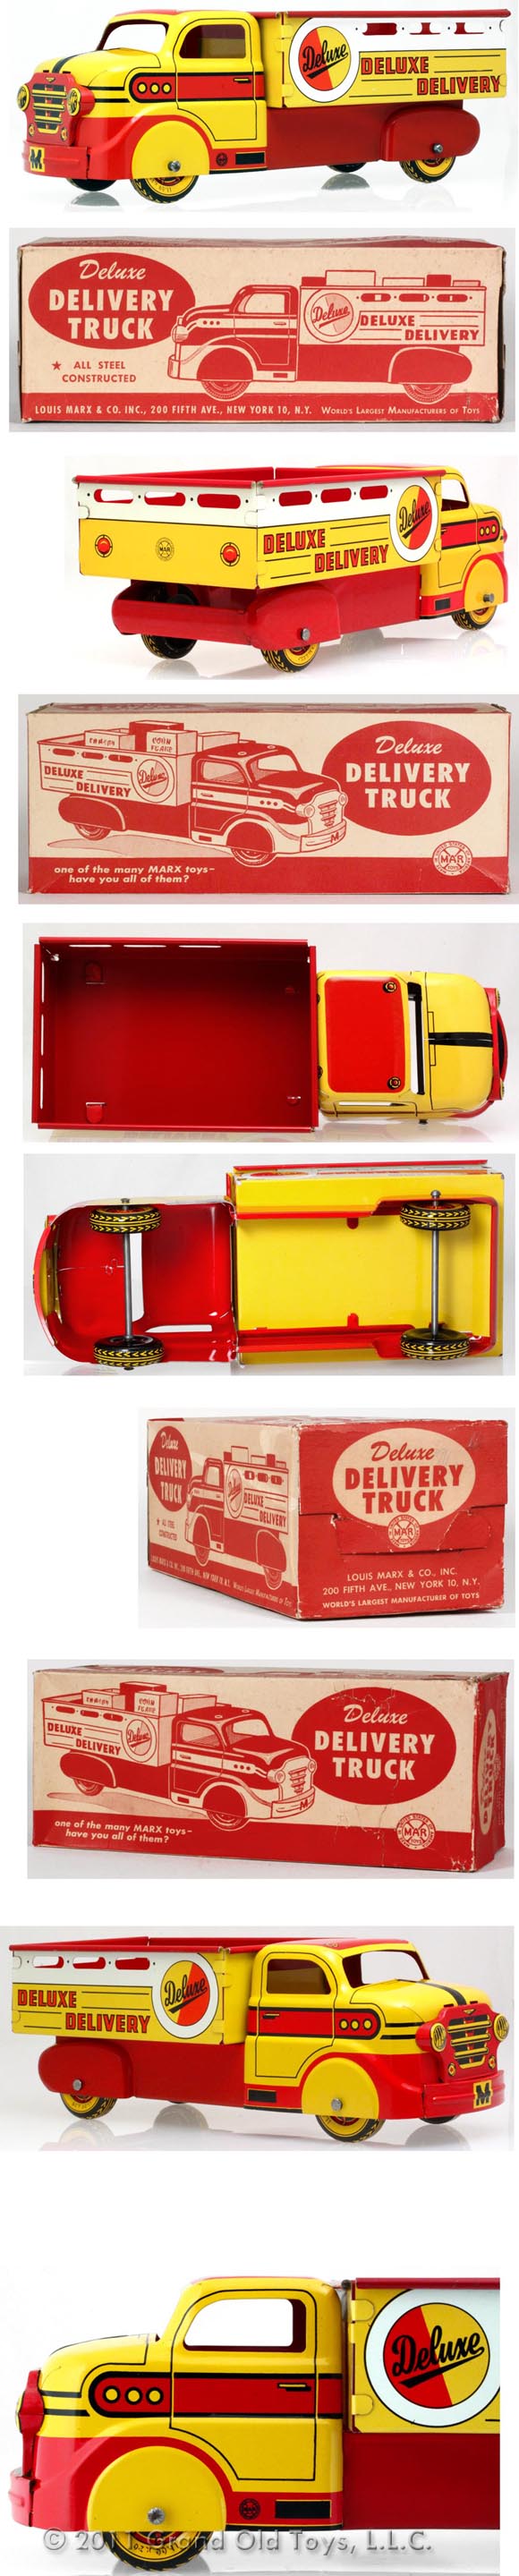 1952 Marx Deluxe Delivery Truck In Original Box